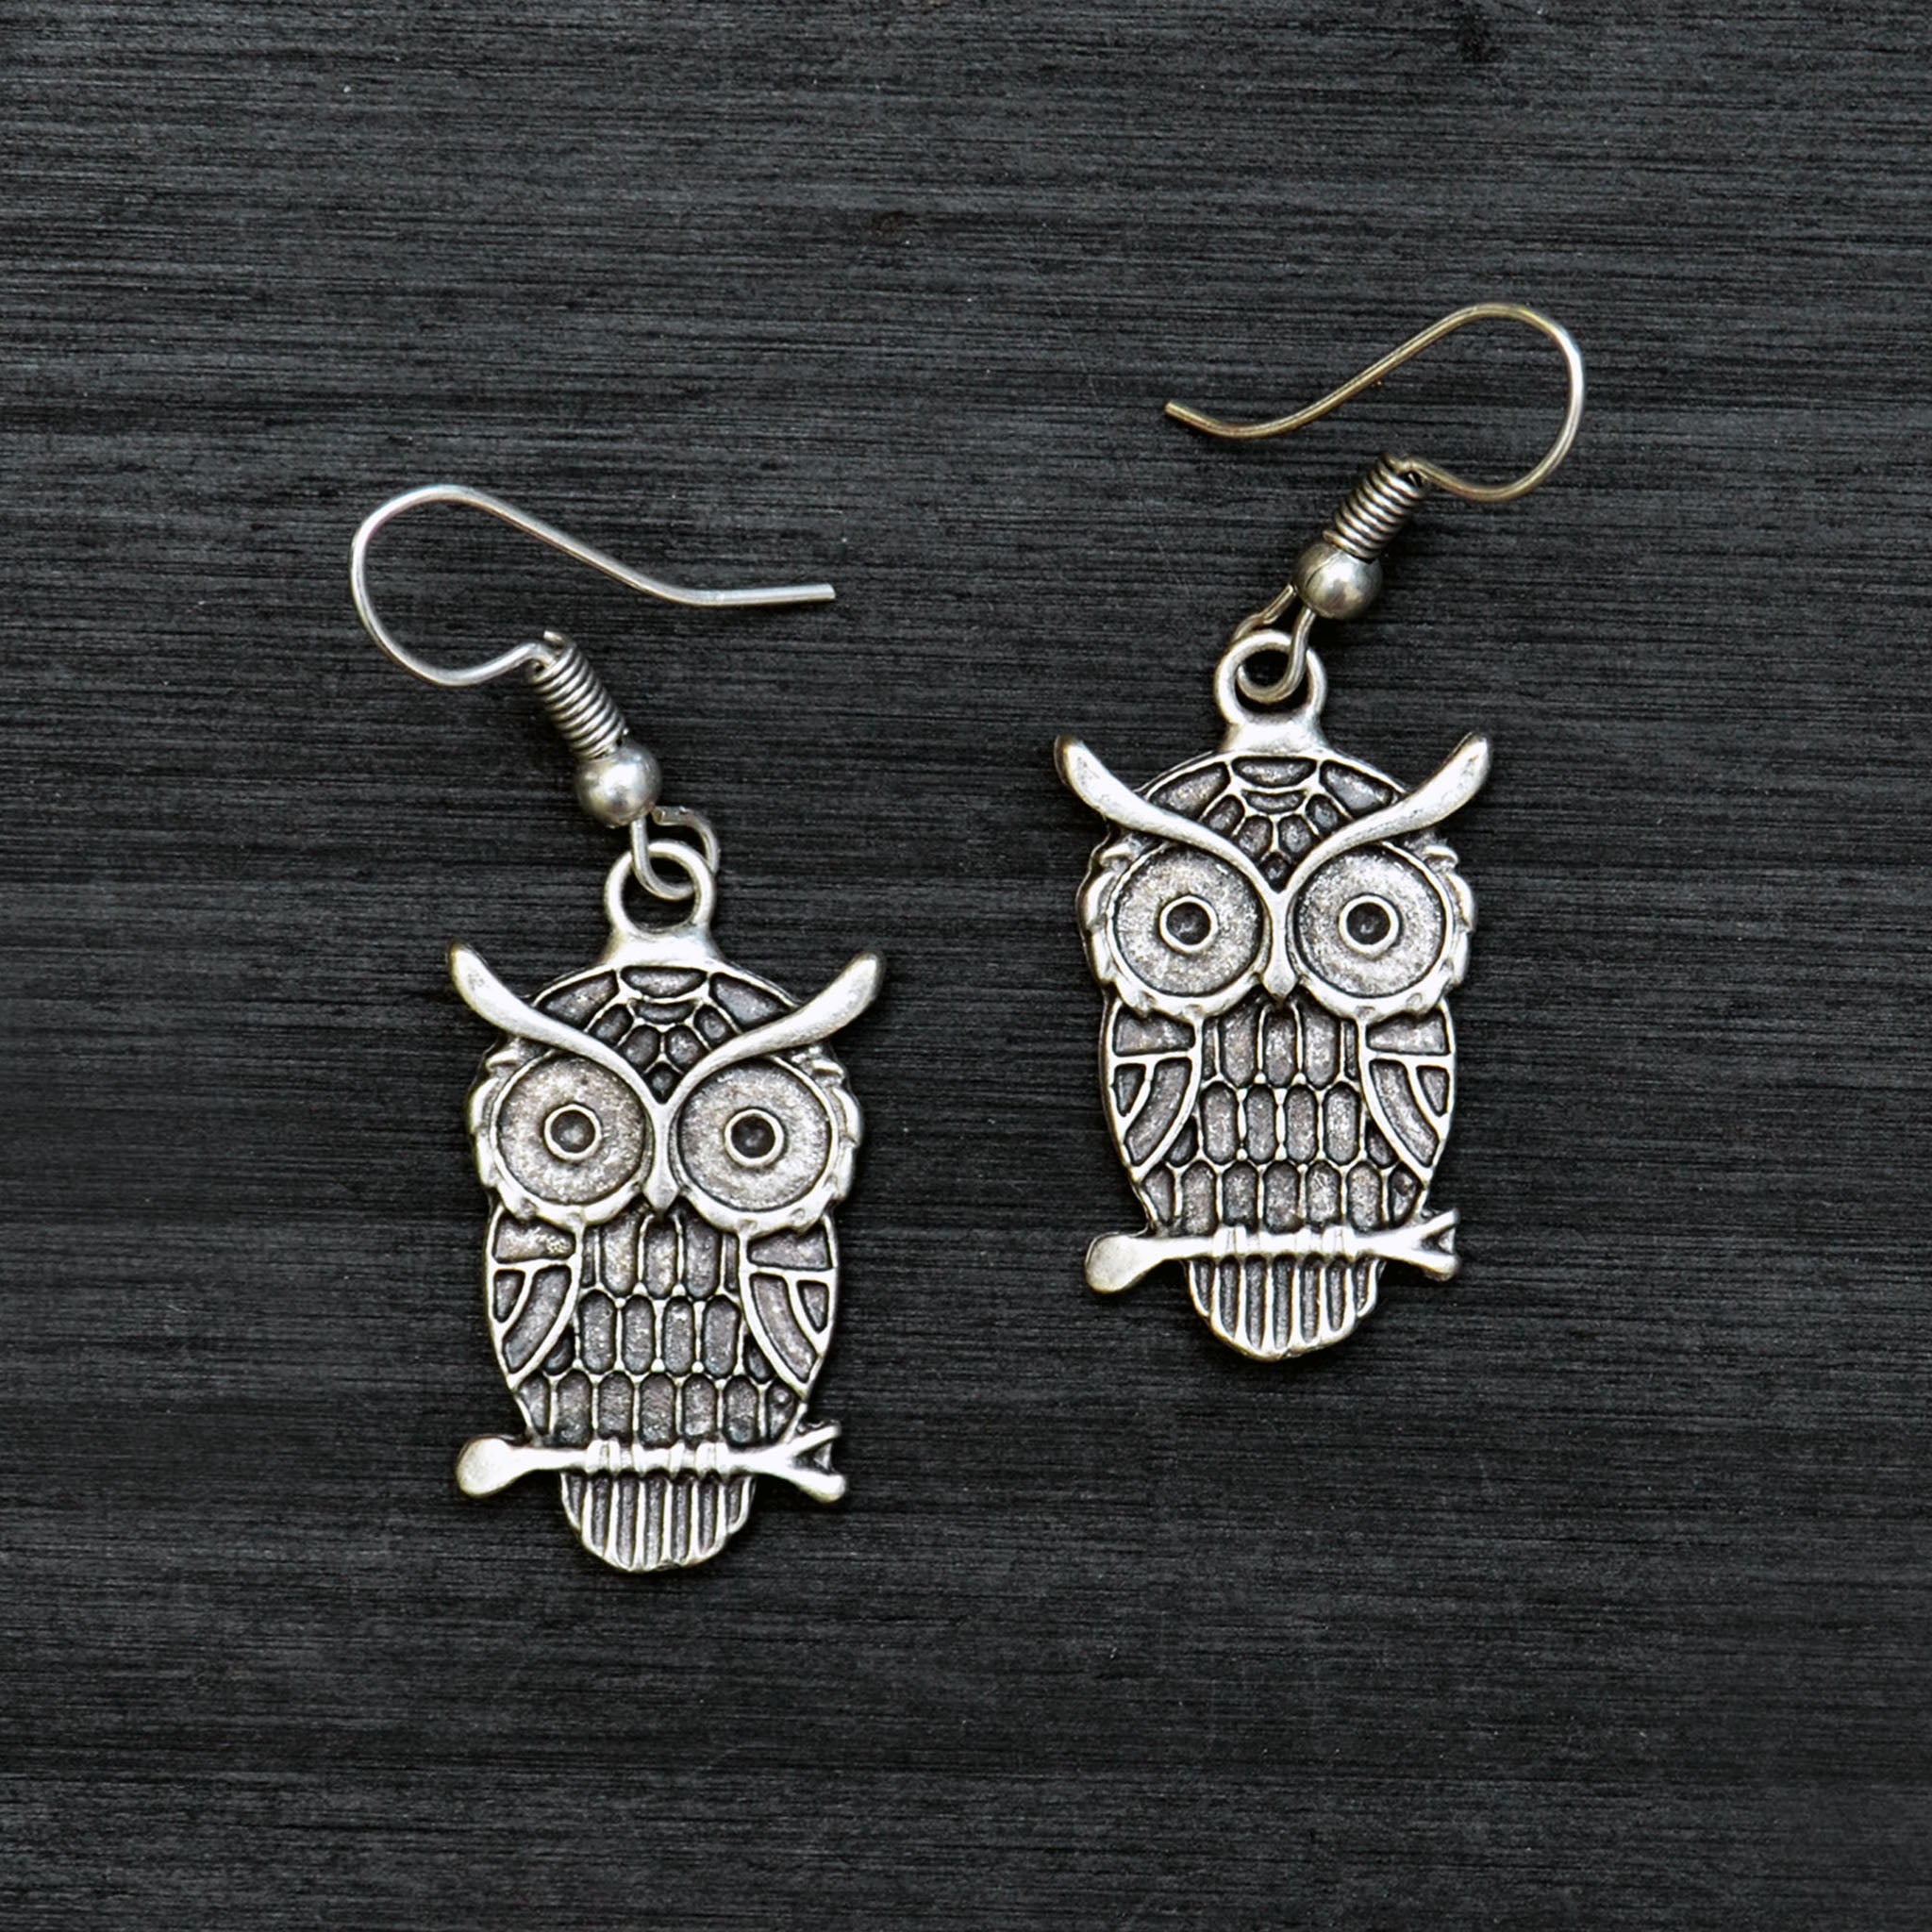 Silver dangle owl earrings on black background